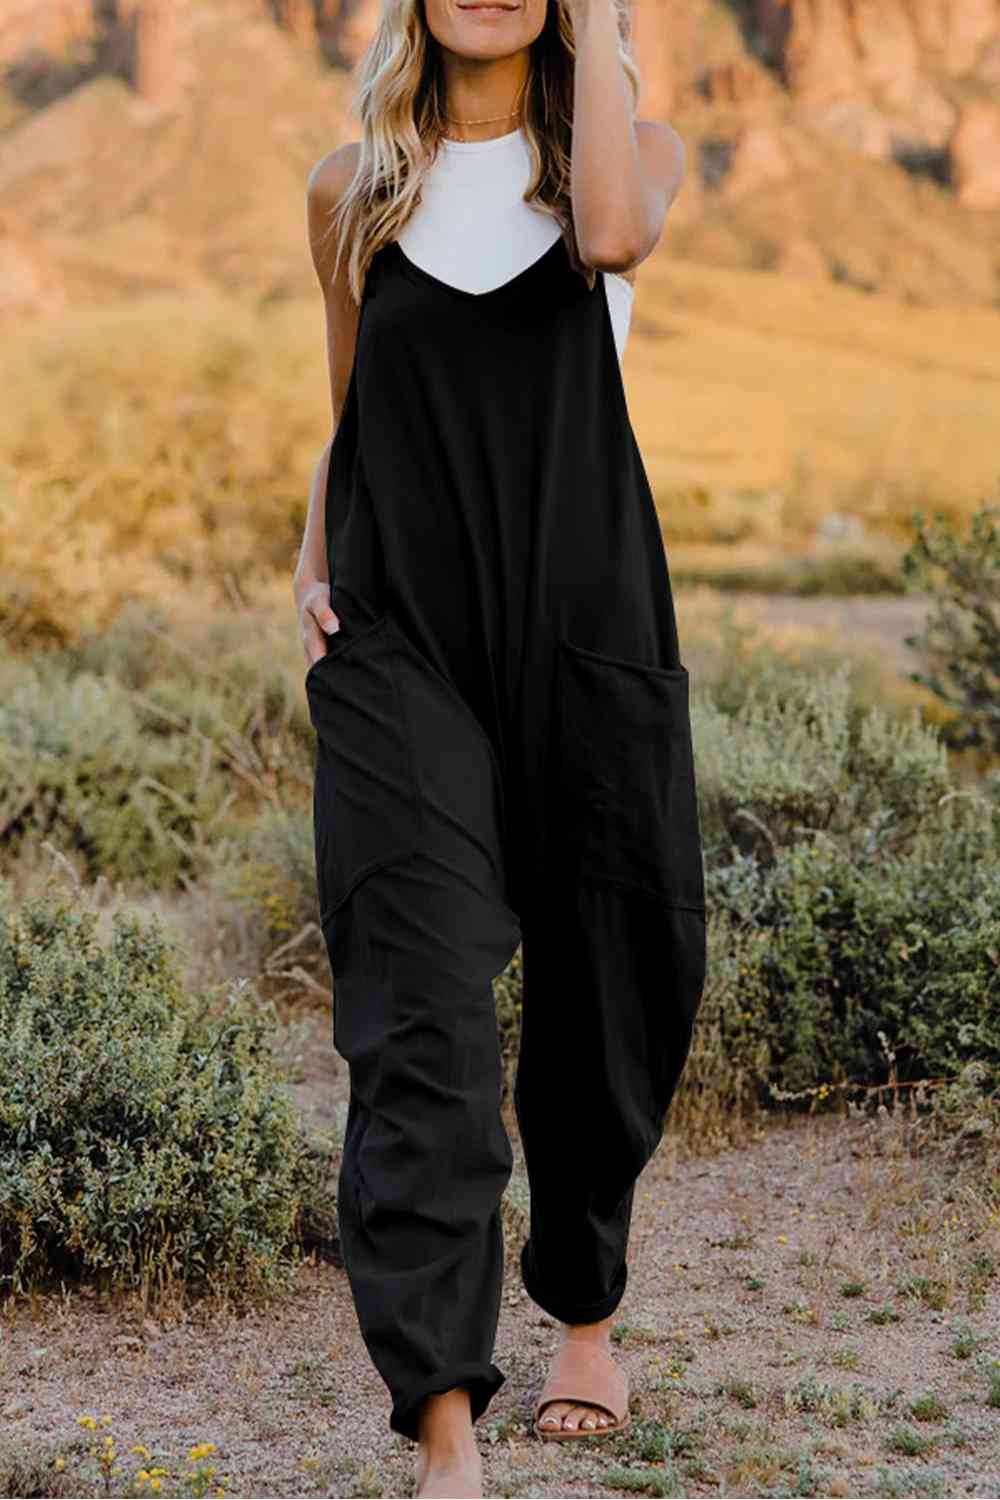 Double Take V-Neck Sleeveless Jumpsuit with Pocket Black